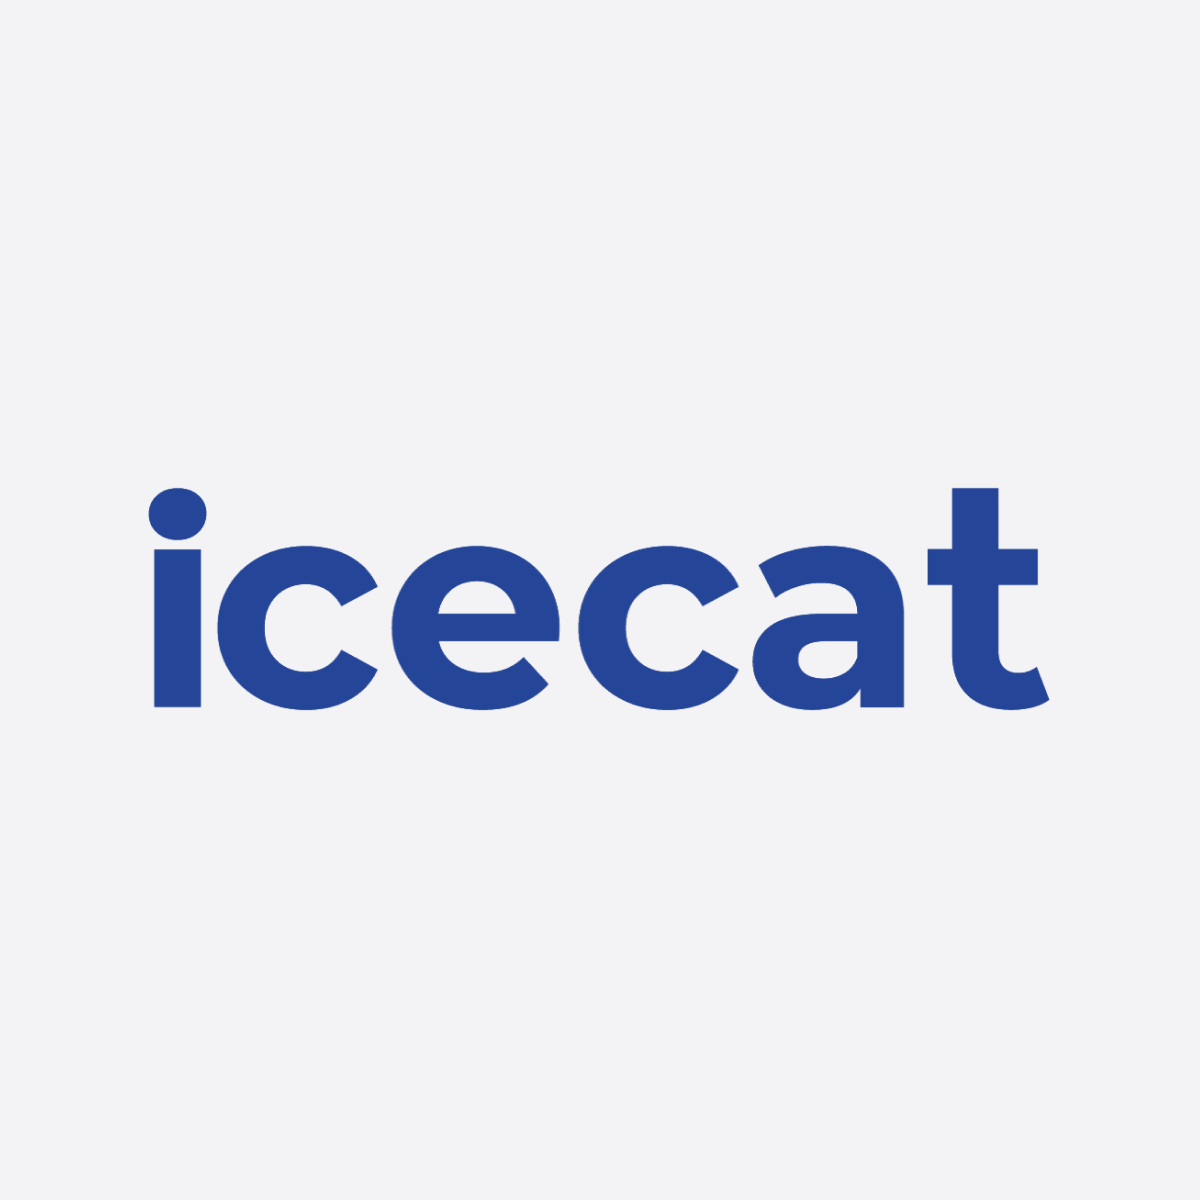 Icecat logo